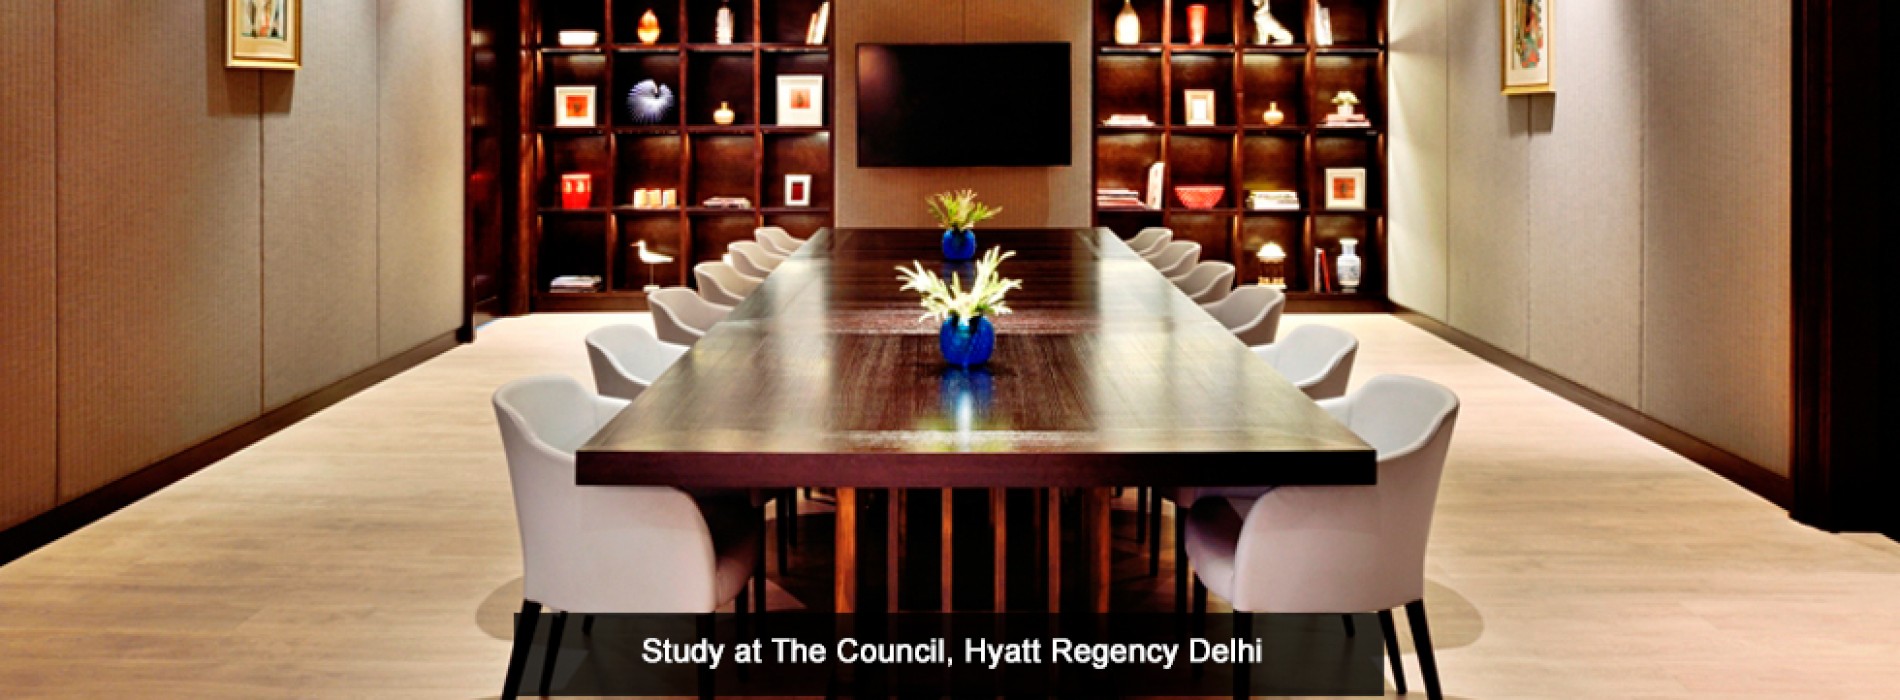 Hyatt Regency Delhi launches an exclusive business club – The Council